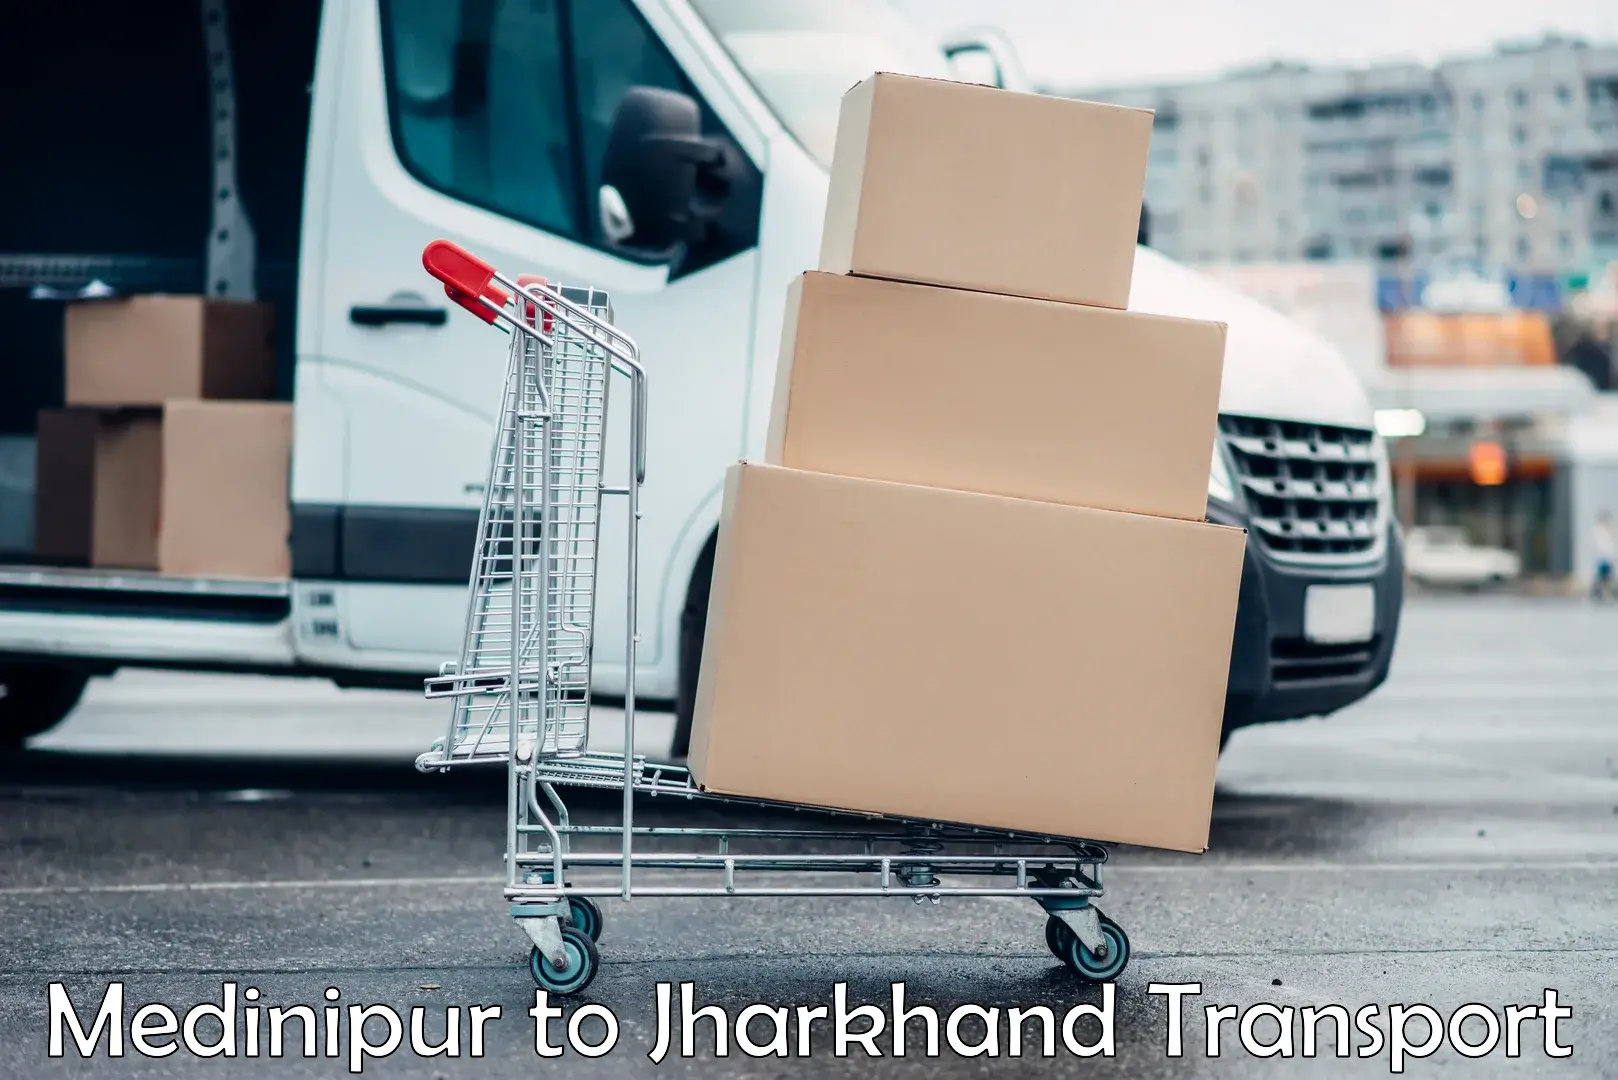 Transport in sharing Medinipur to Daltonganj